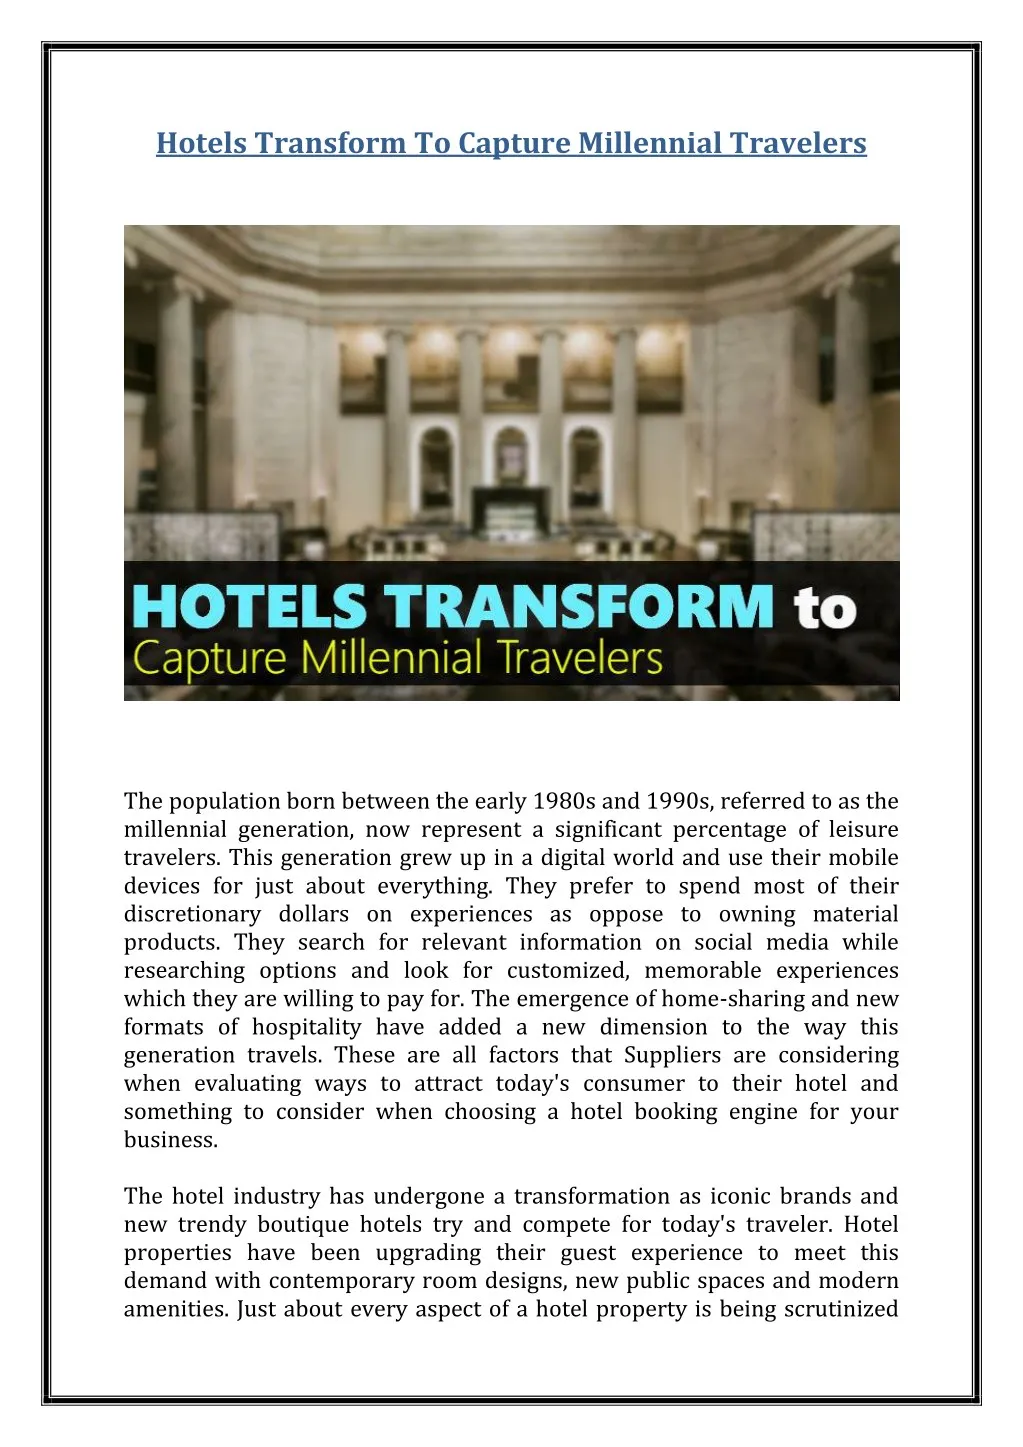 hotels transform to capture millennial travelers